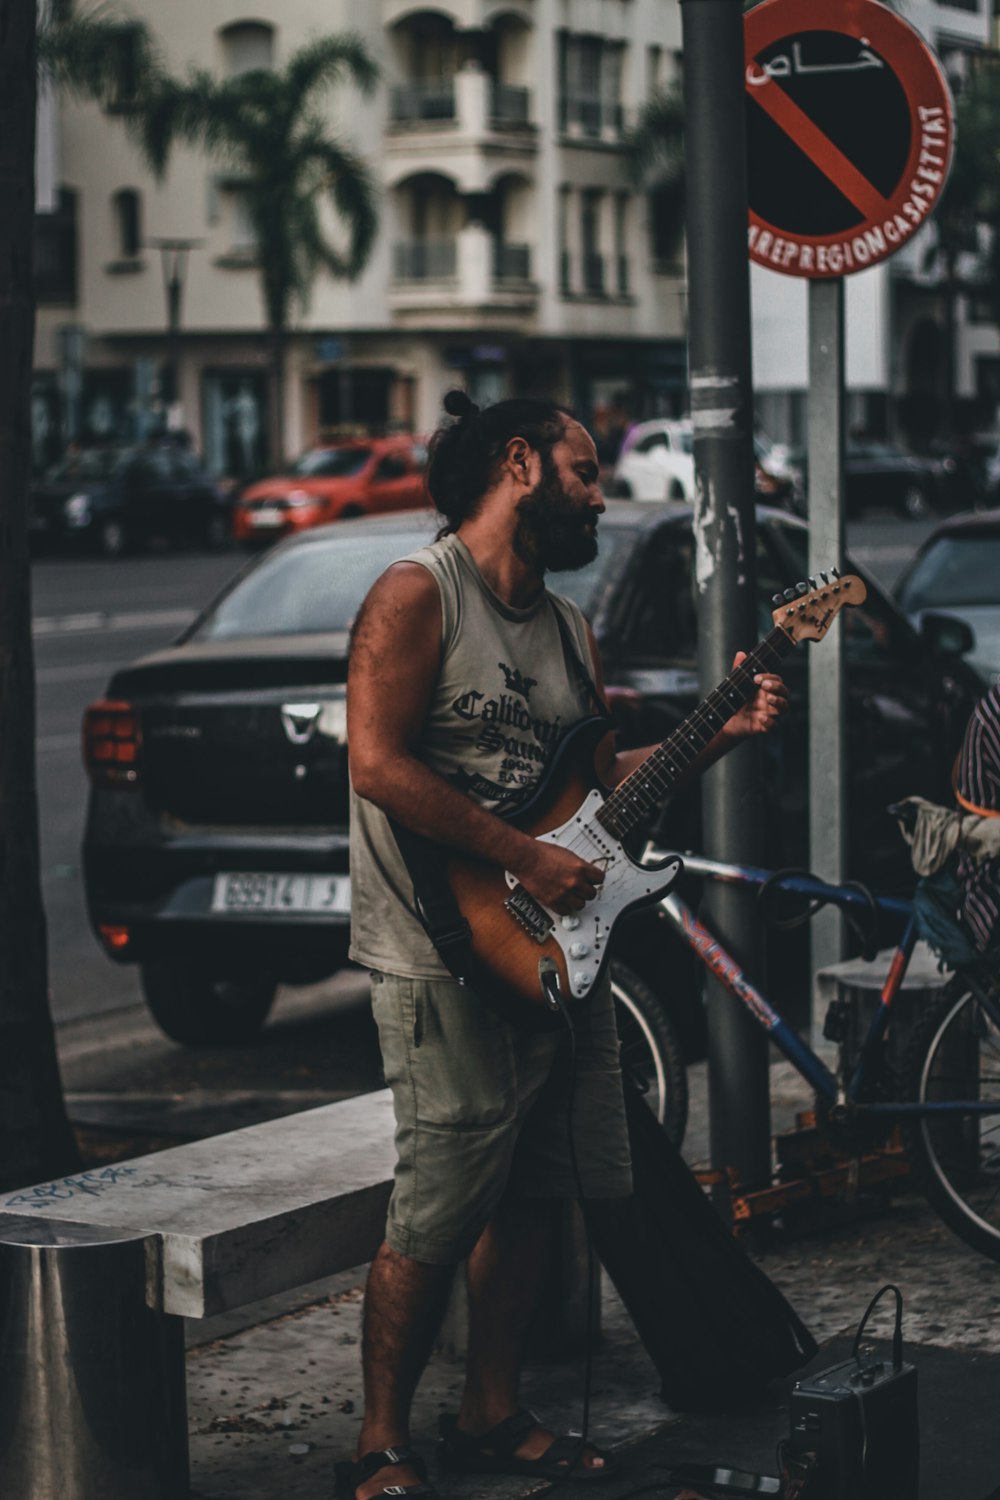 a man playing a guitar next to a street sign